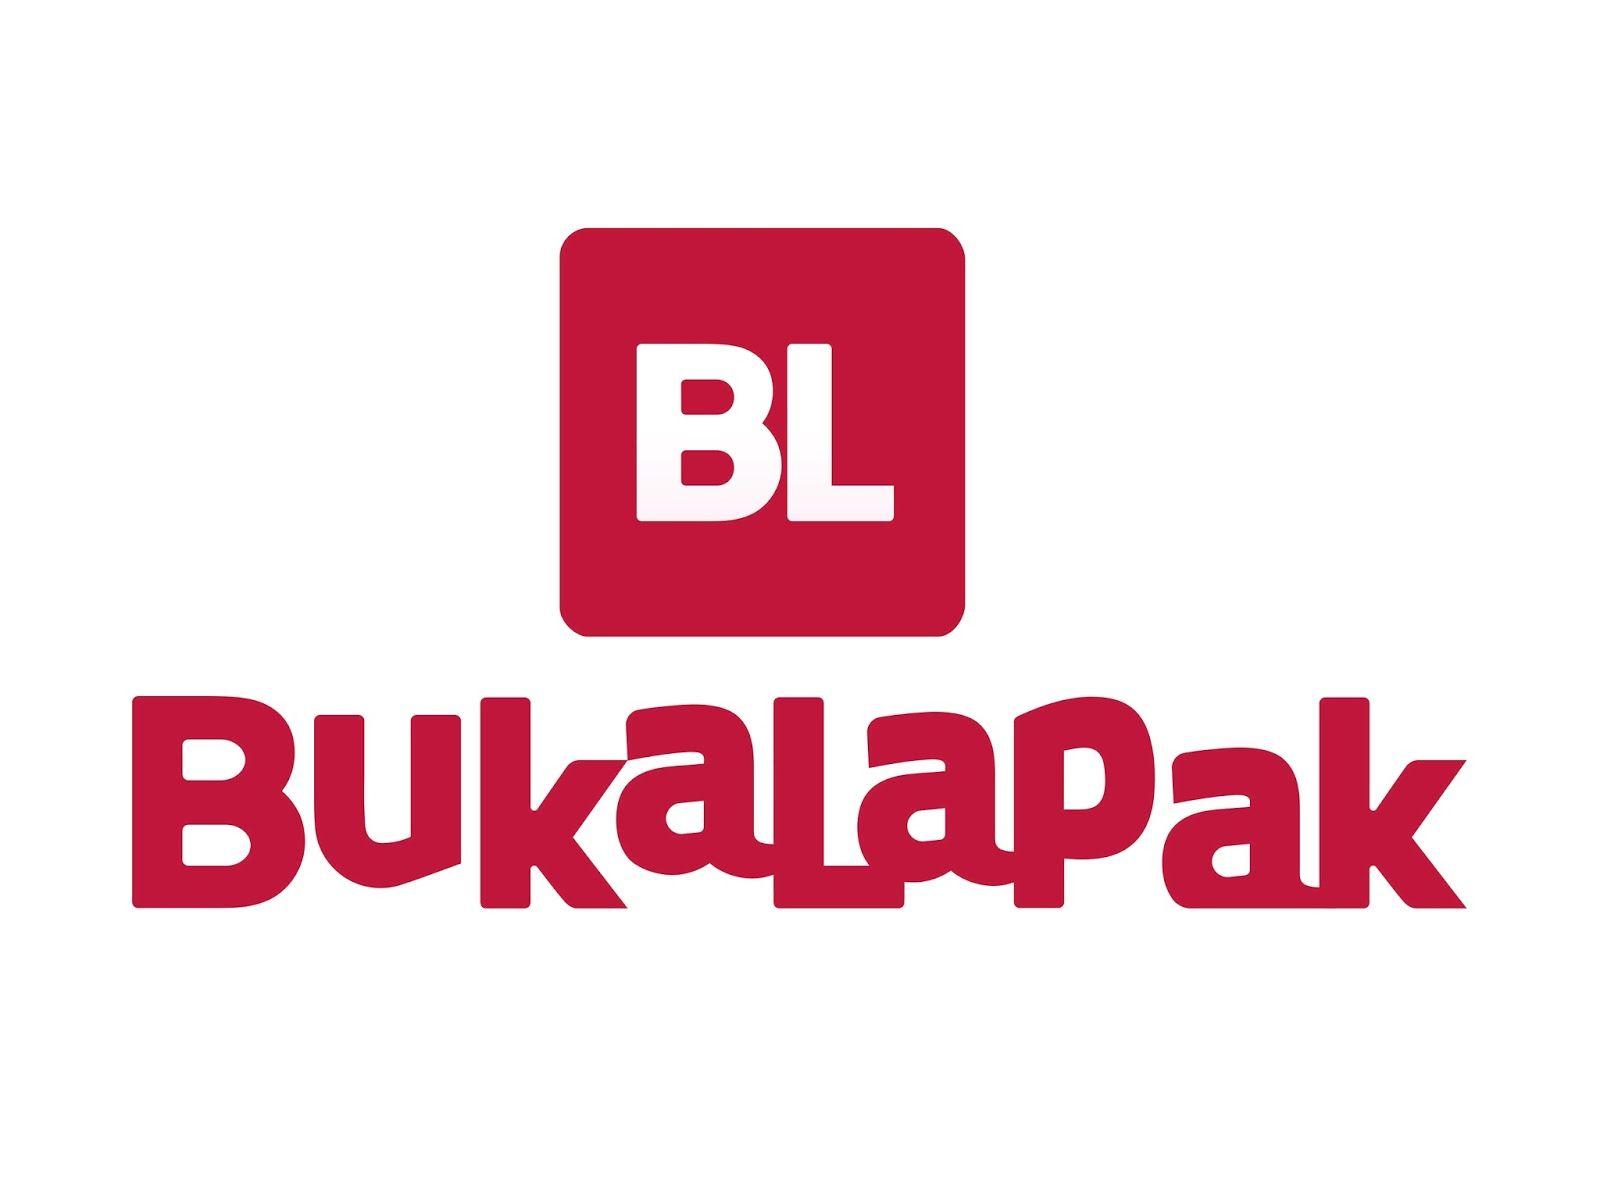 bukalapak Logo - IDR 3.4 Trillion from Microsoft, GIC